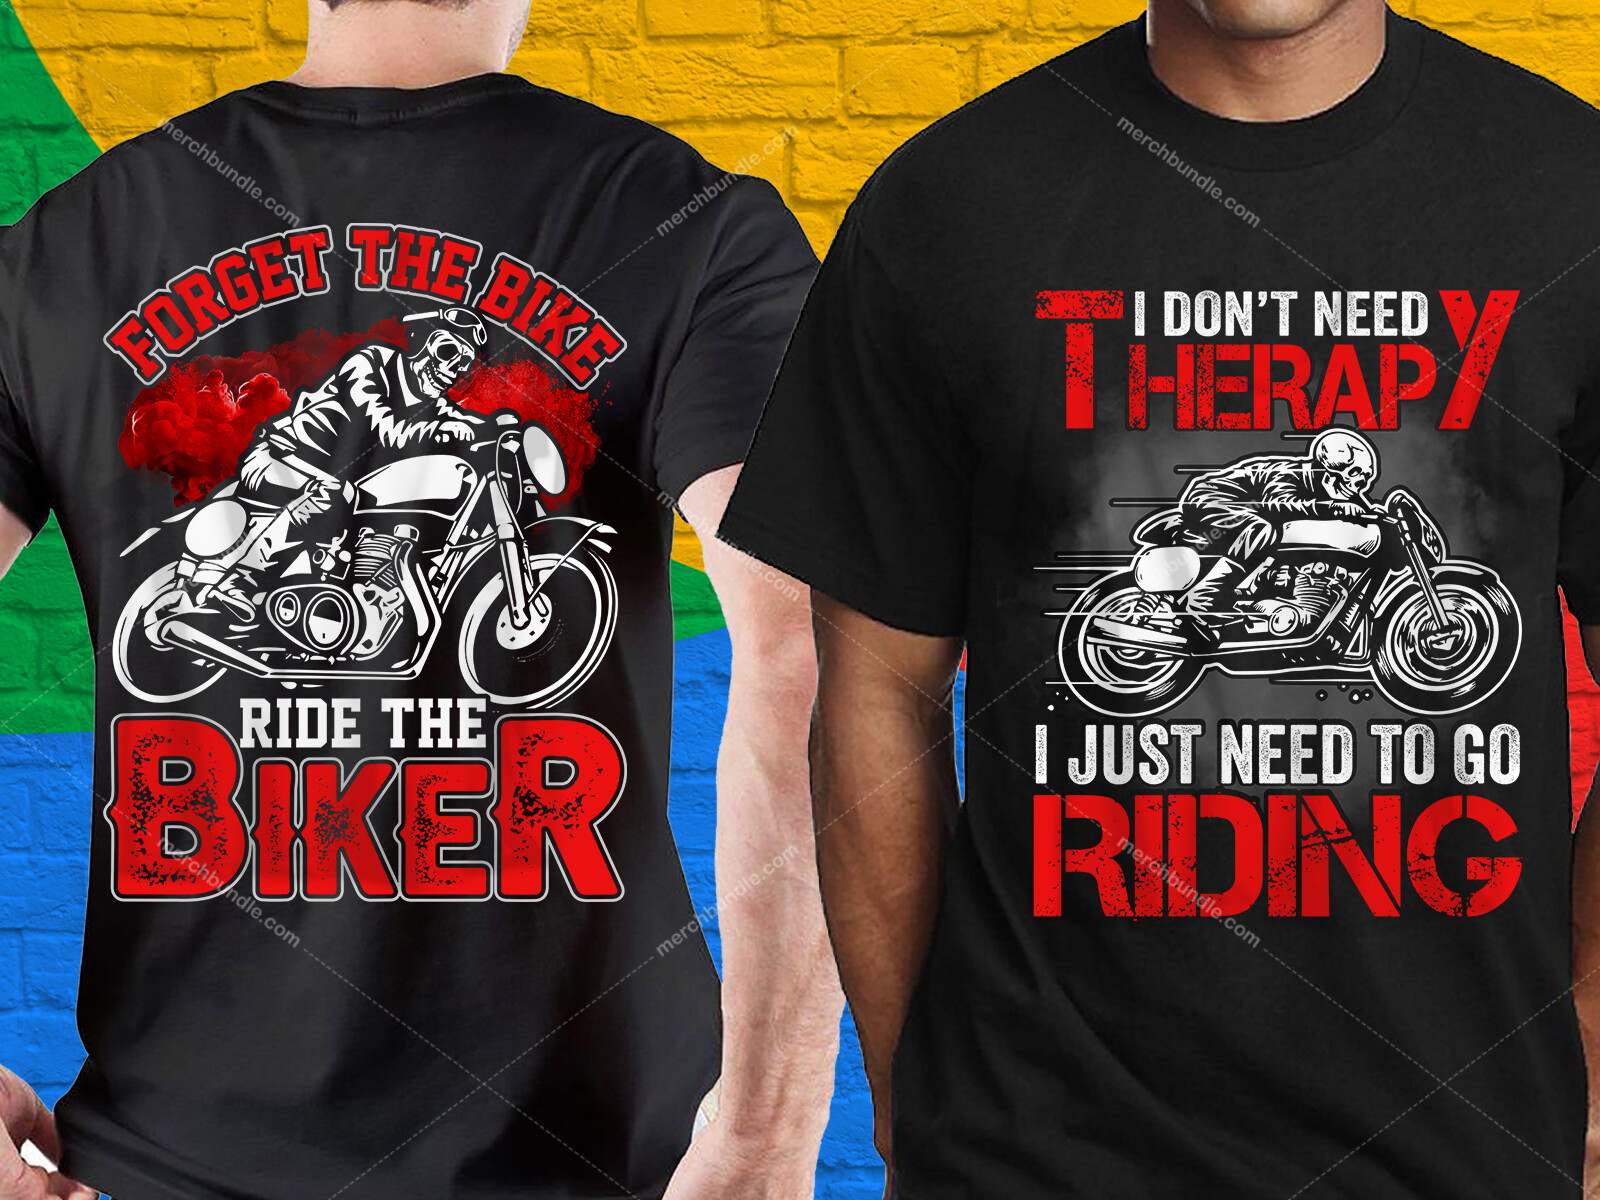 ArtStation - Motorcycle T Shirts - Bike T Shirts Design